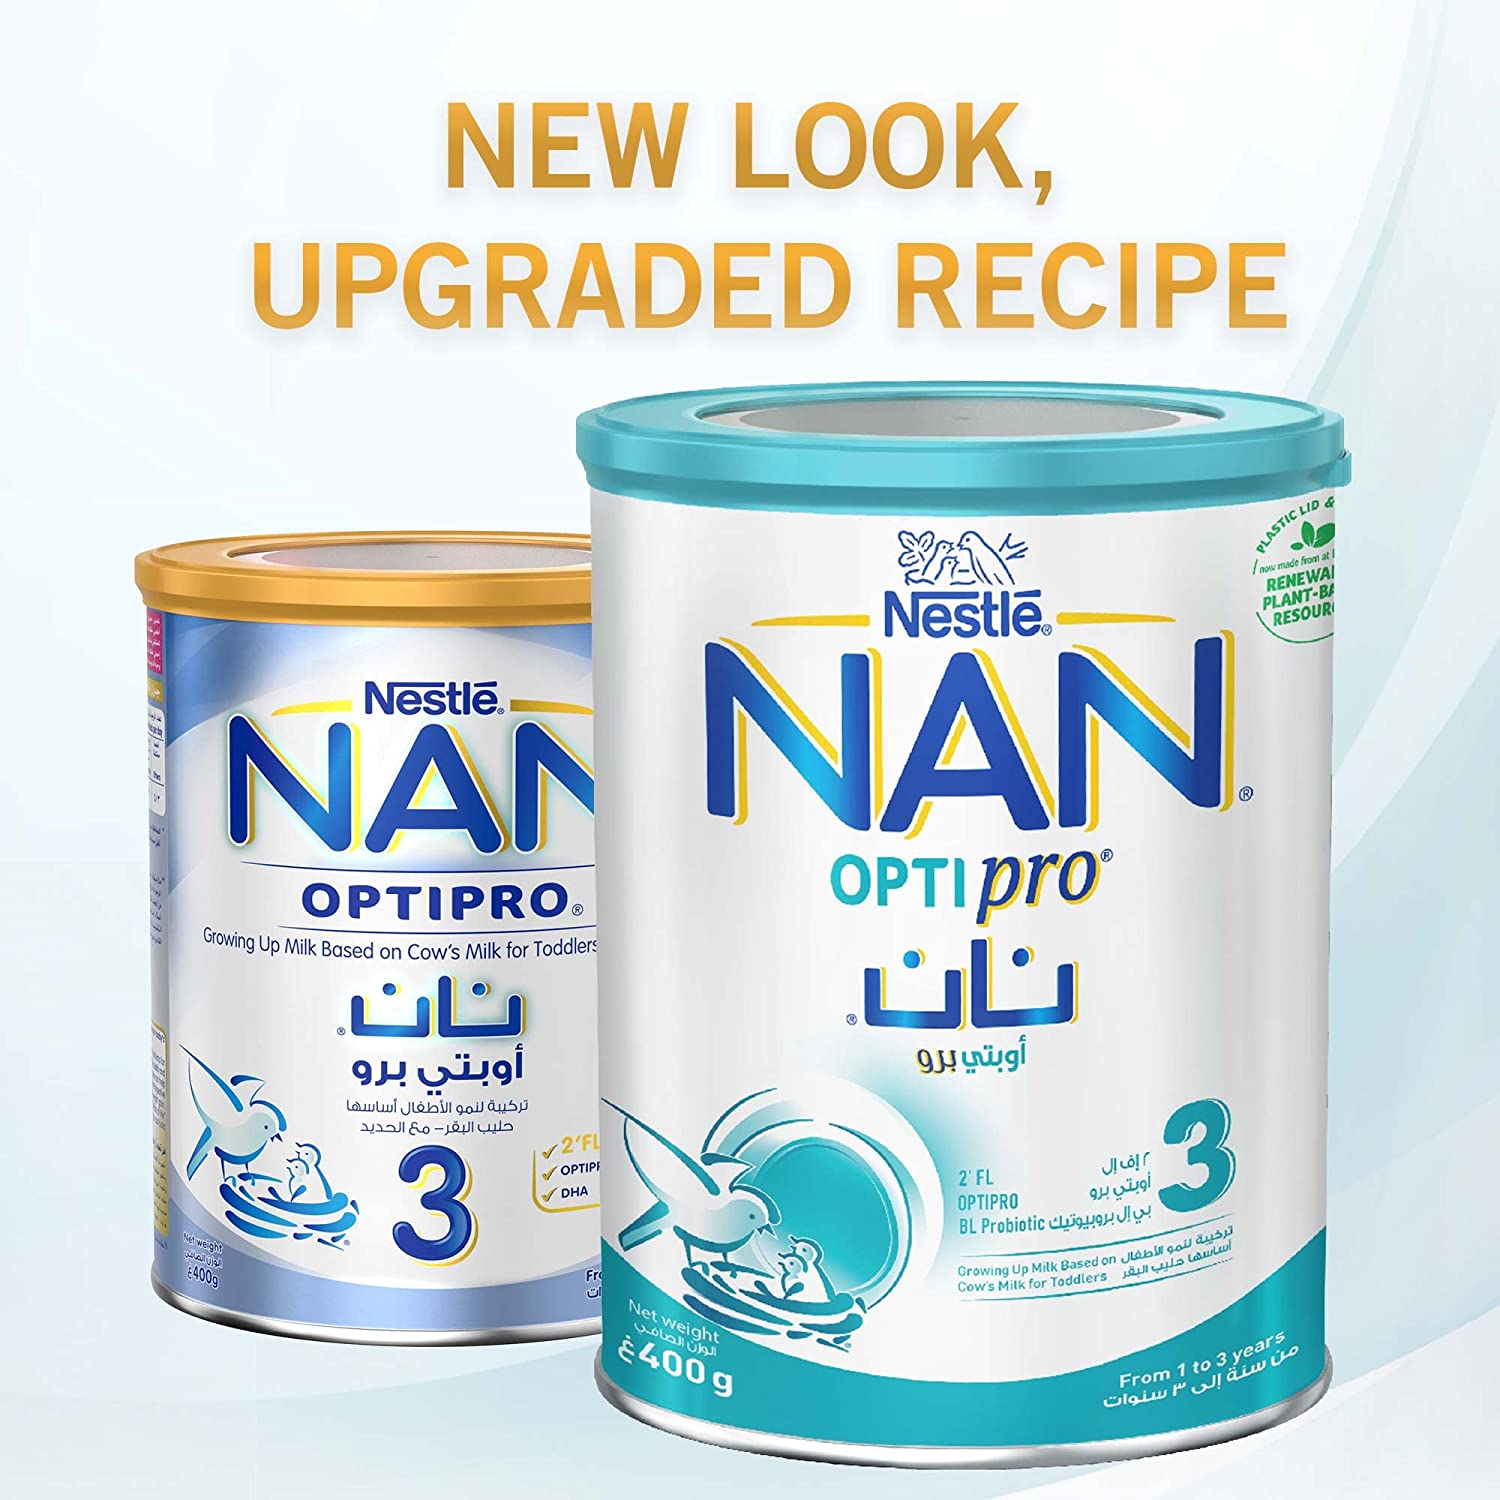 Nestle Nan Optipro 2 Formula Milk Powder (6 M+) - Online Grocery